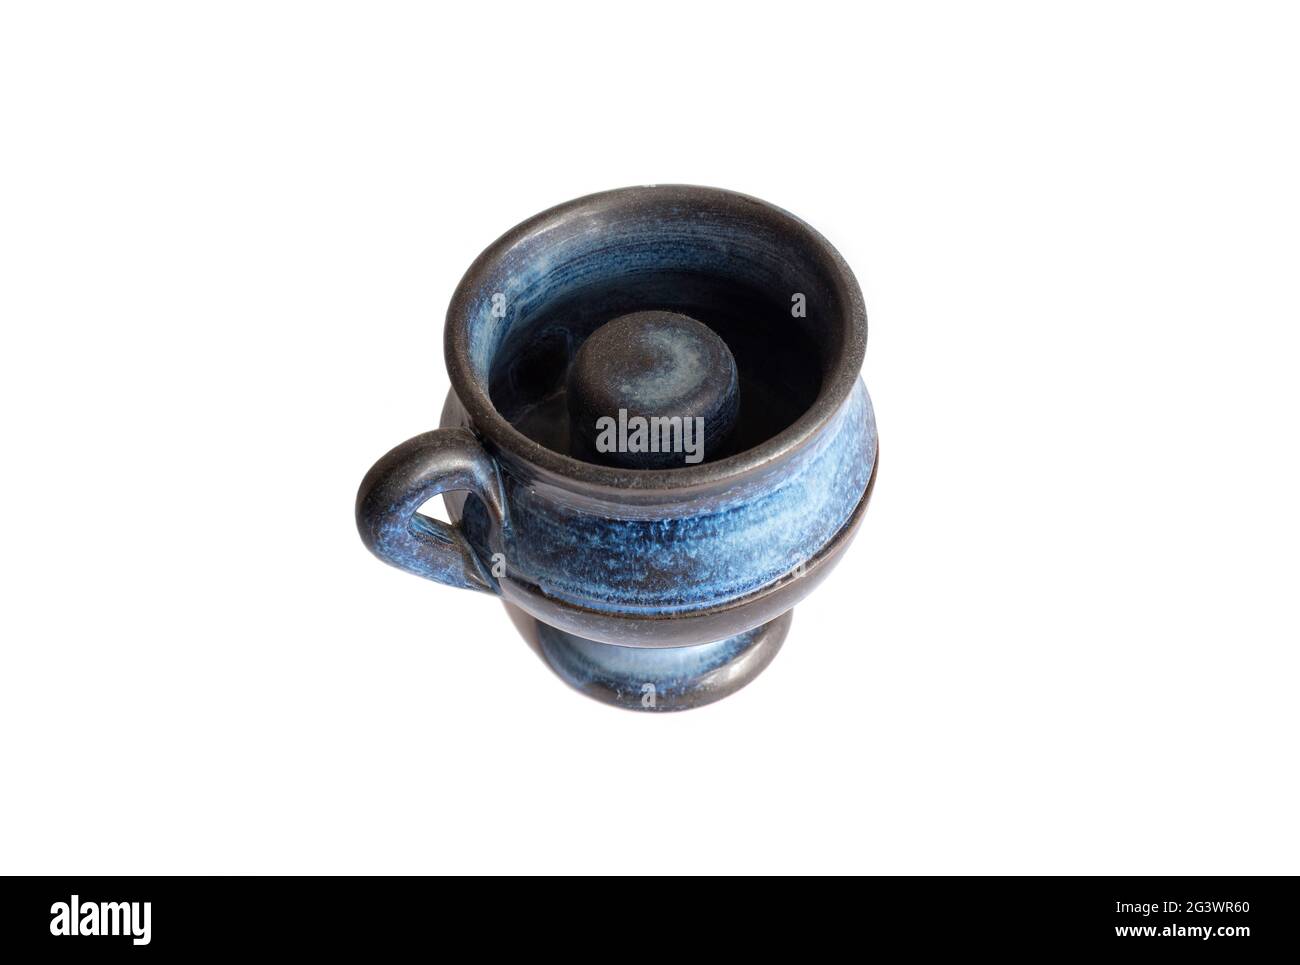 https://c8.alamy.com/comp/2G3WR60/very-ancient-national-greek-cup-2G3WR60.jpg